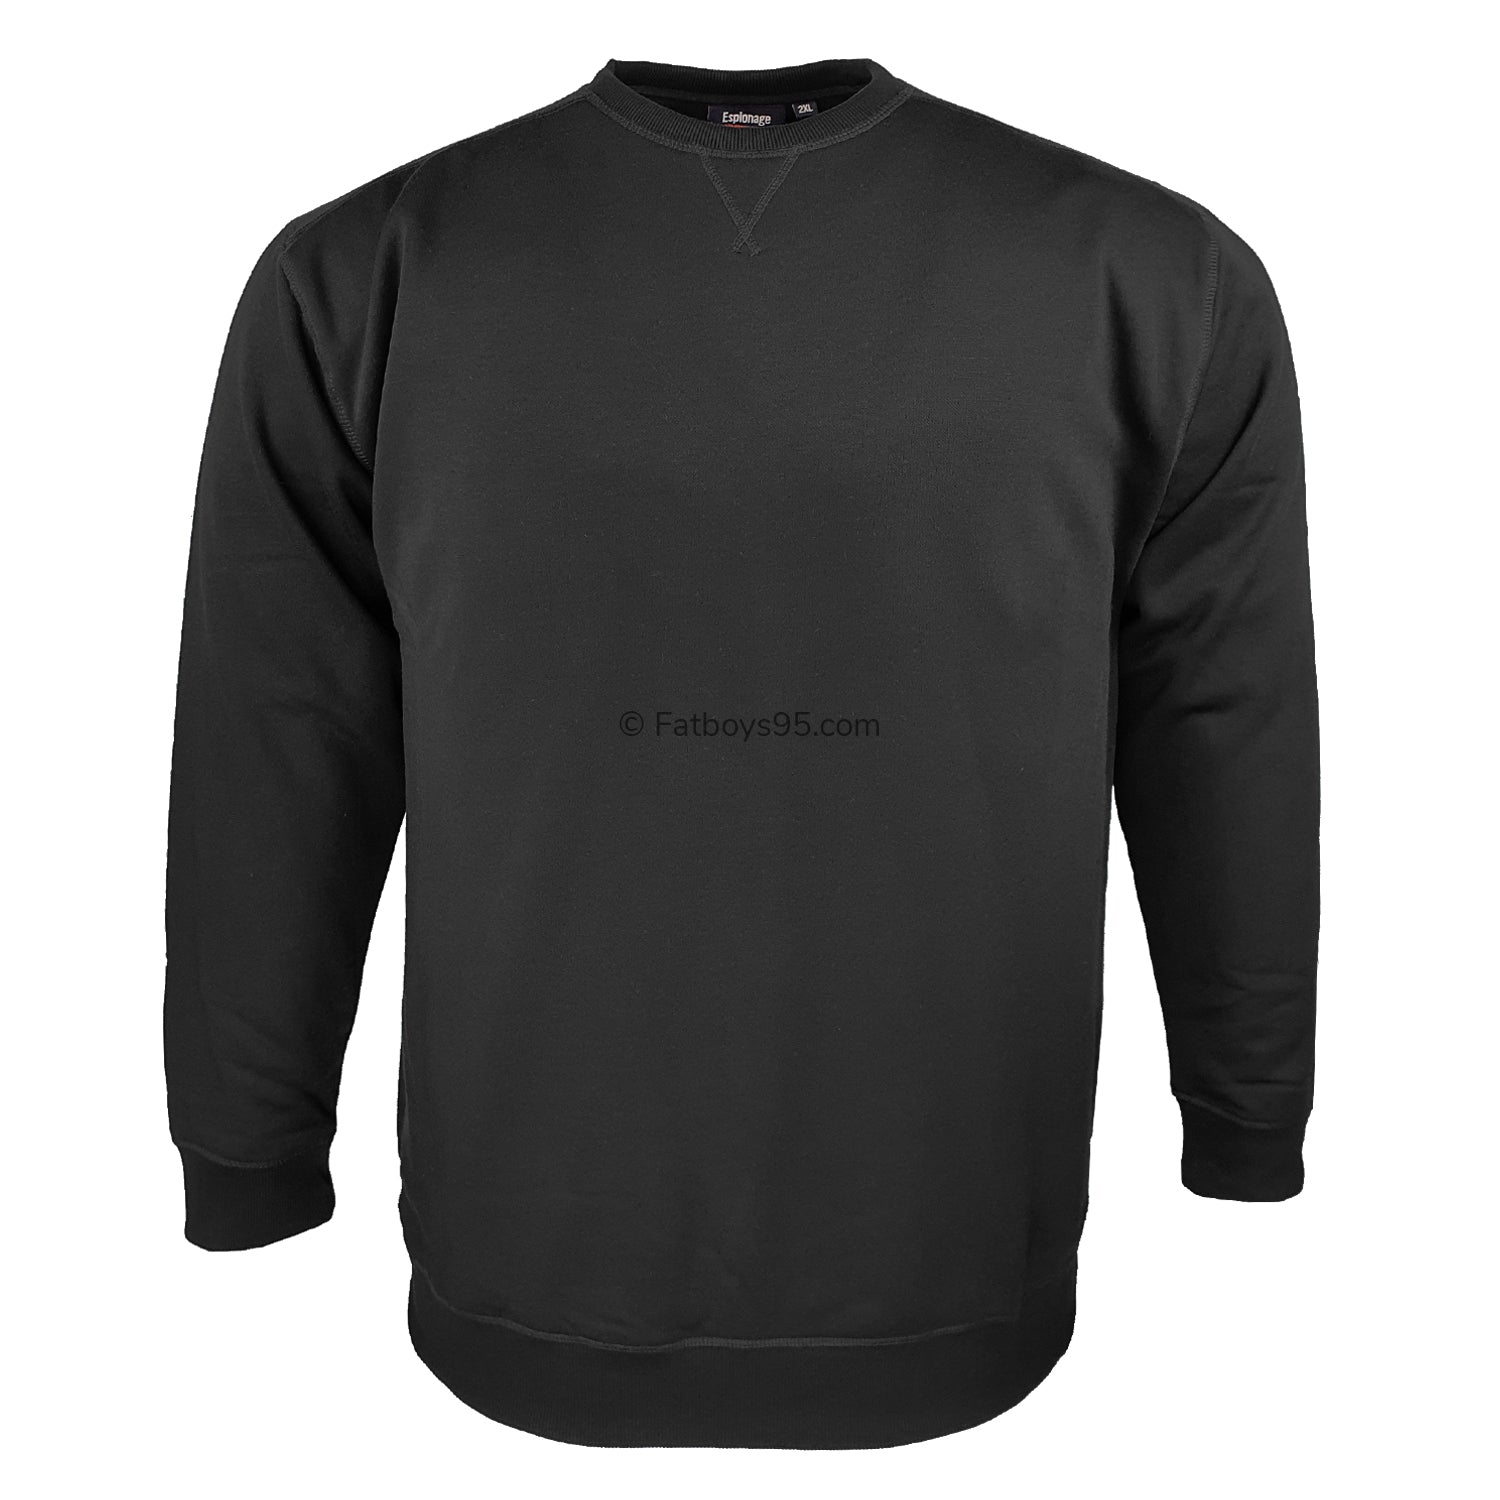 Espionage Plain Sweatshirt - LW016 - Black 1